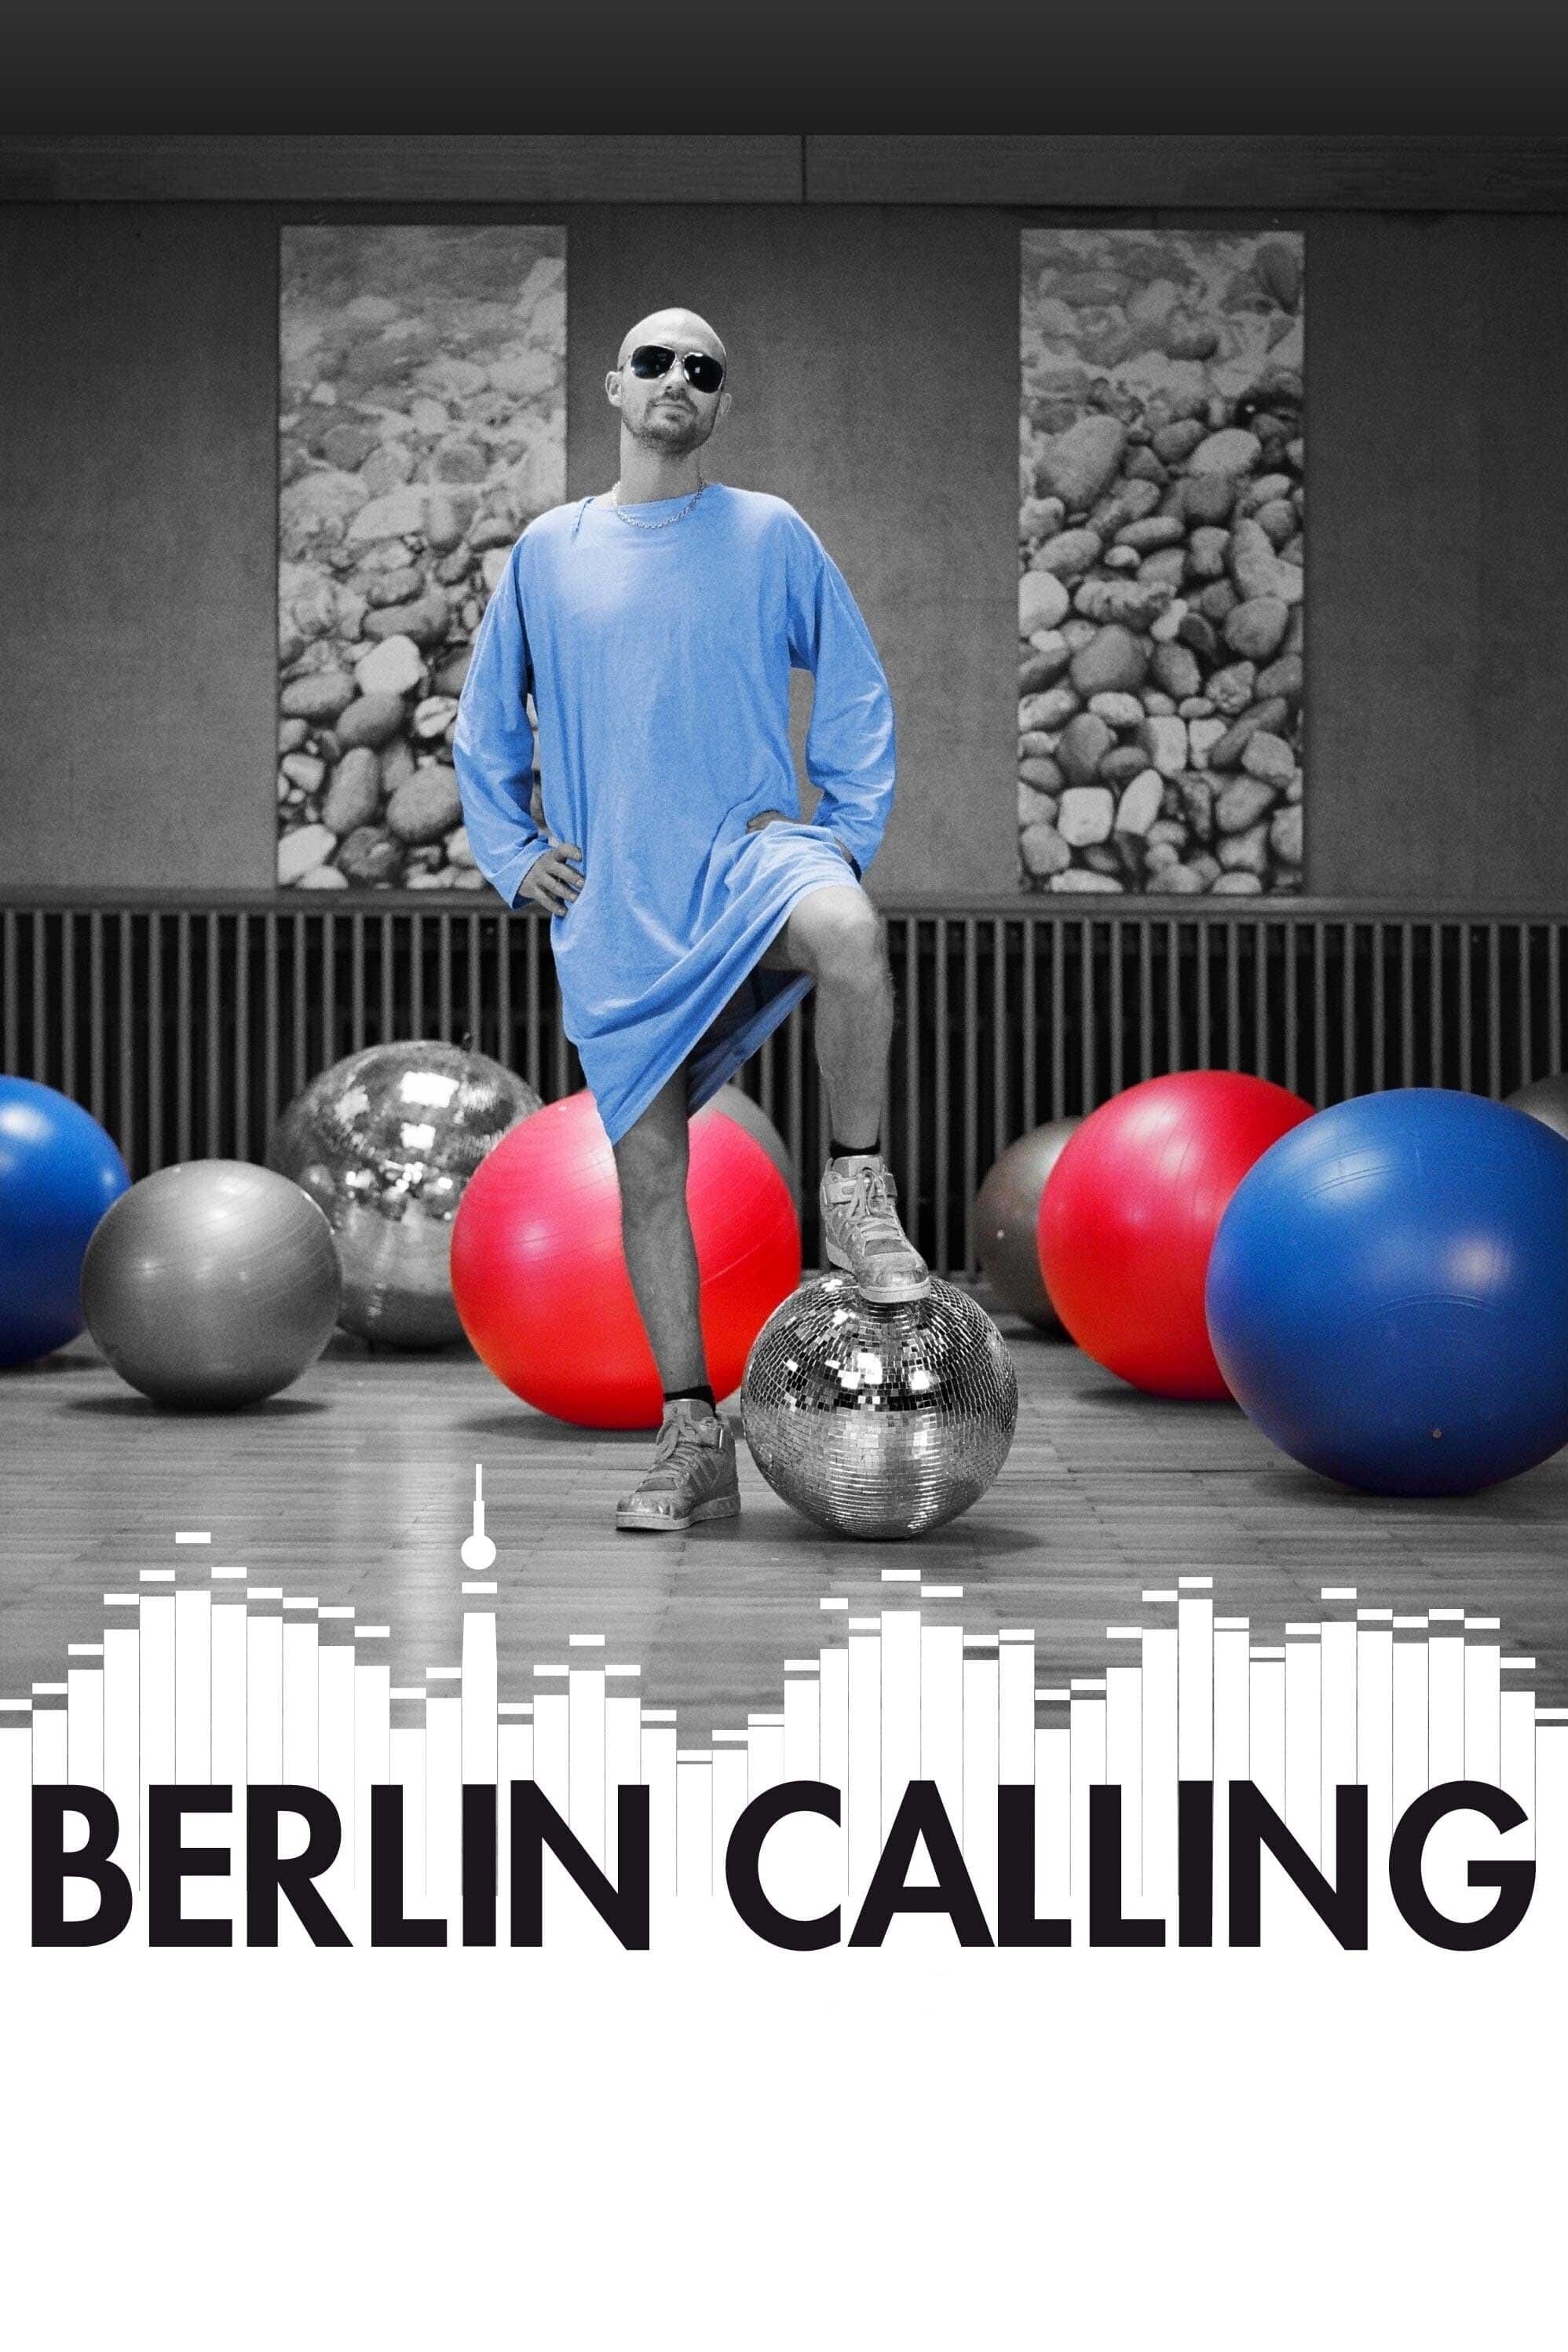 Berlin Calling (2008)